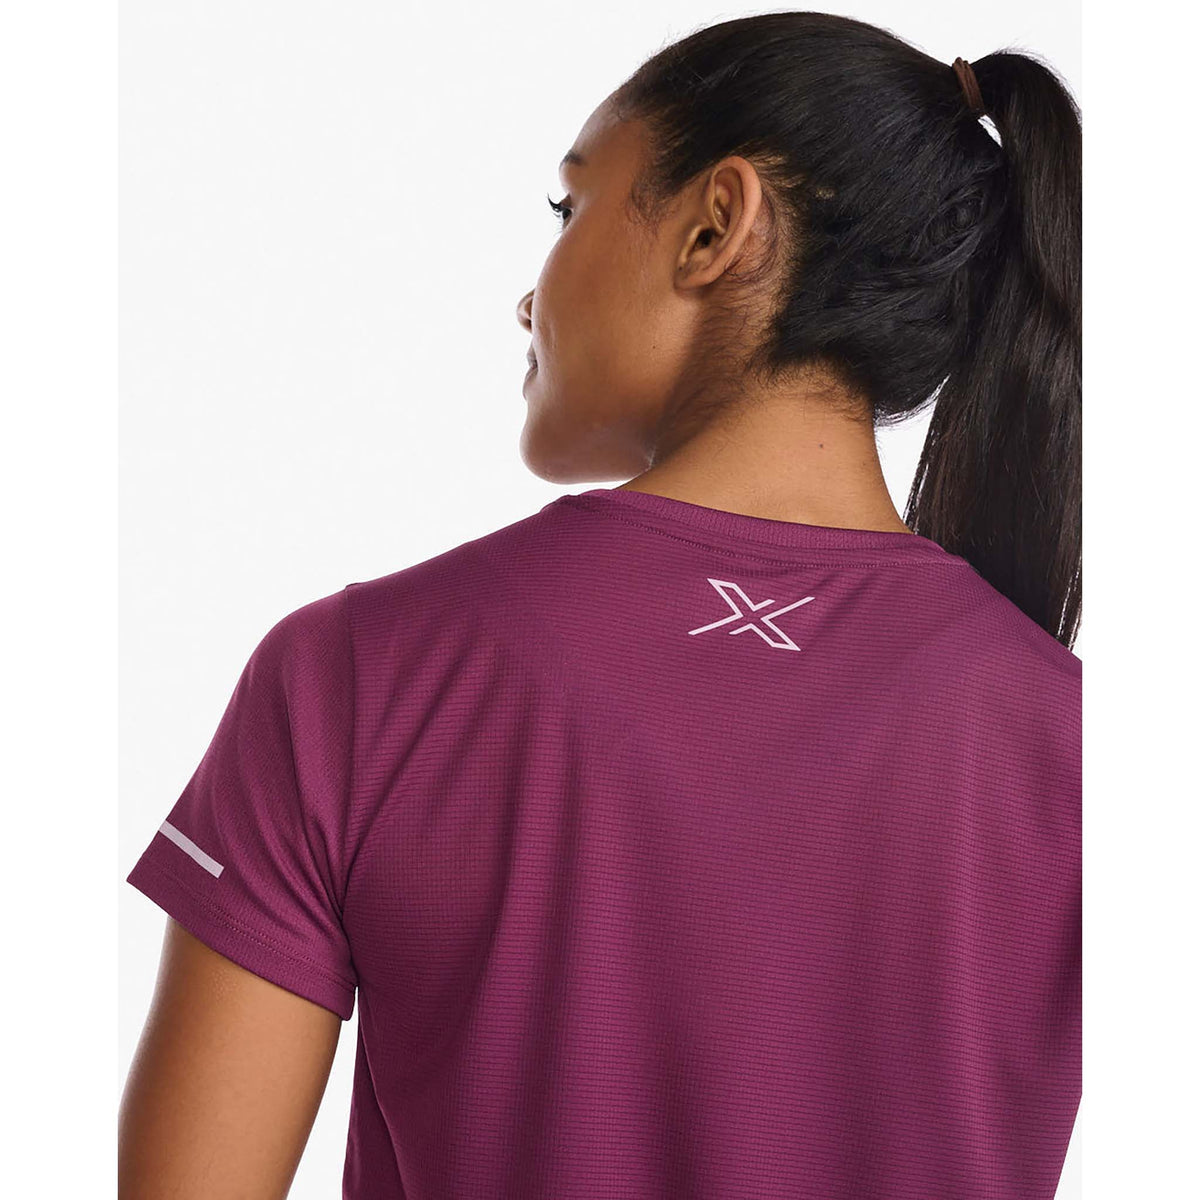 2XU Aero Tee t-shirt de course à pied mulberry femme dos details